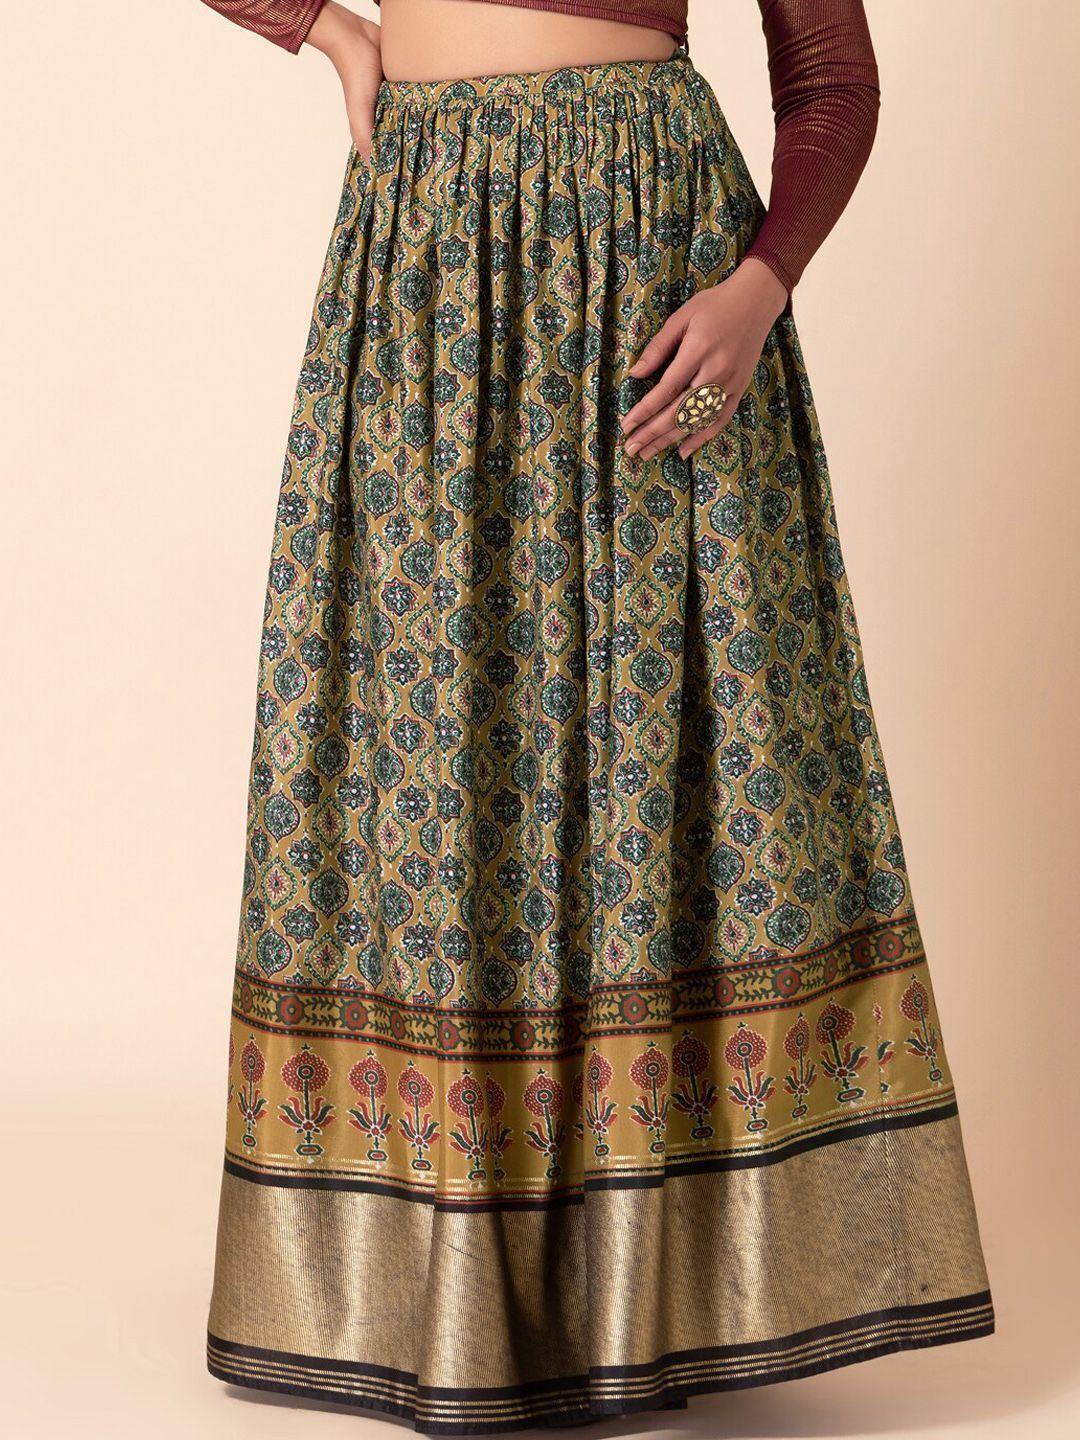 INDYA Mustard Yellow Ajrakh-Printed Lehenga Flared Ethnic Skirt